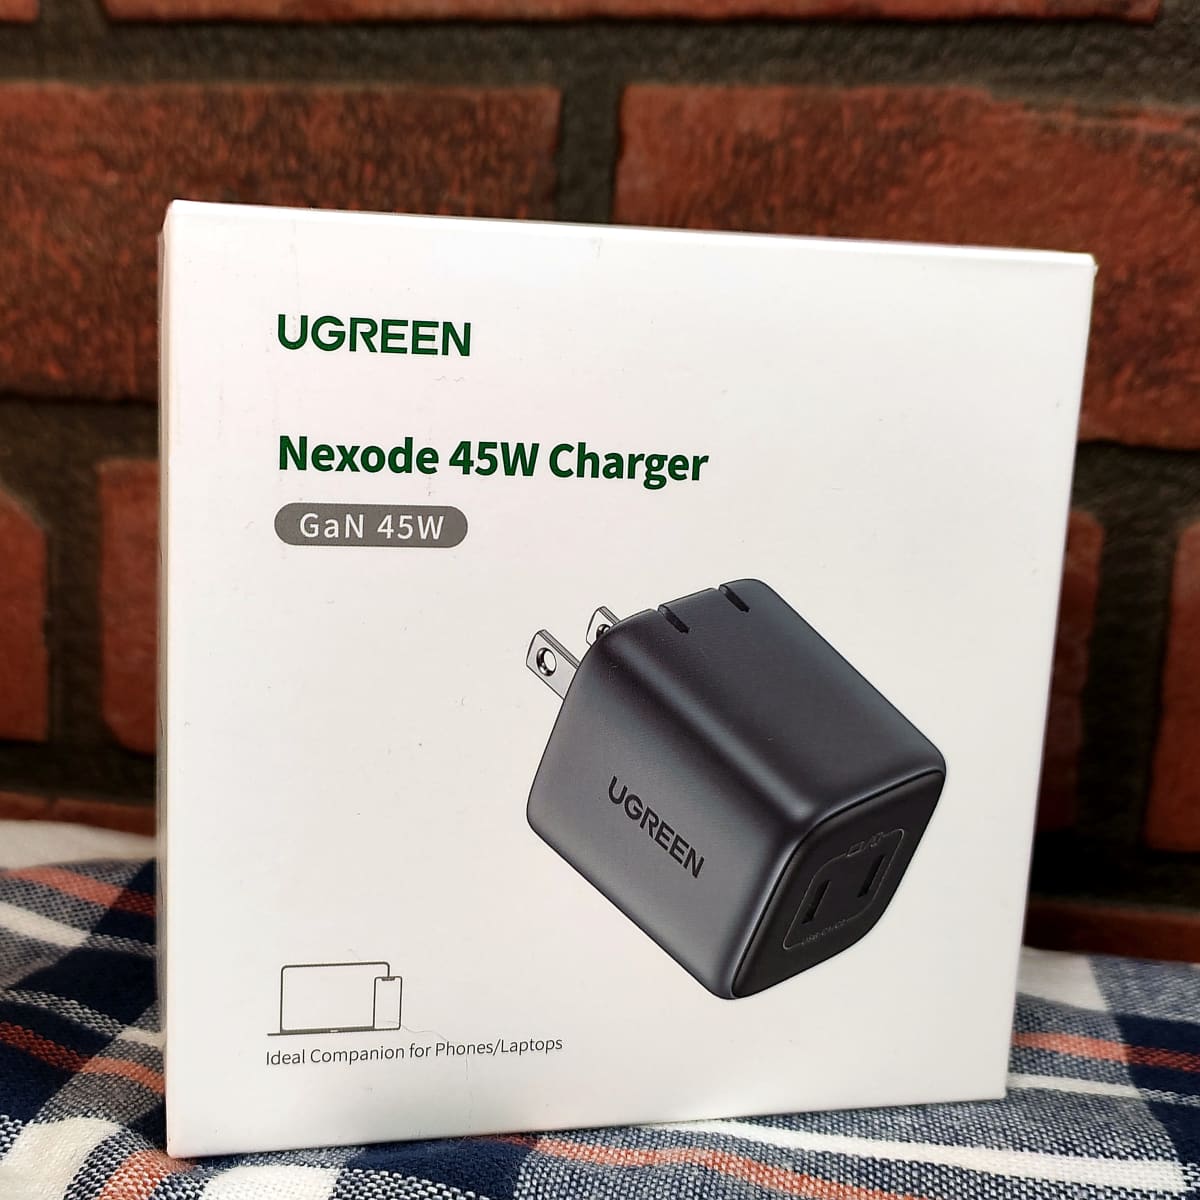 UGREEN Nexode 45W GaN 2-Port USB-C Wall Charger